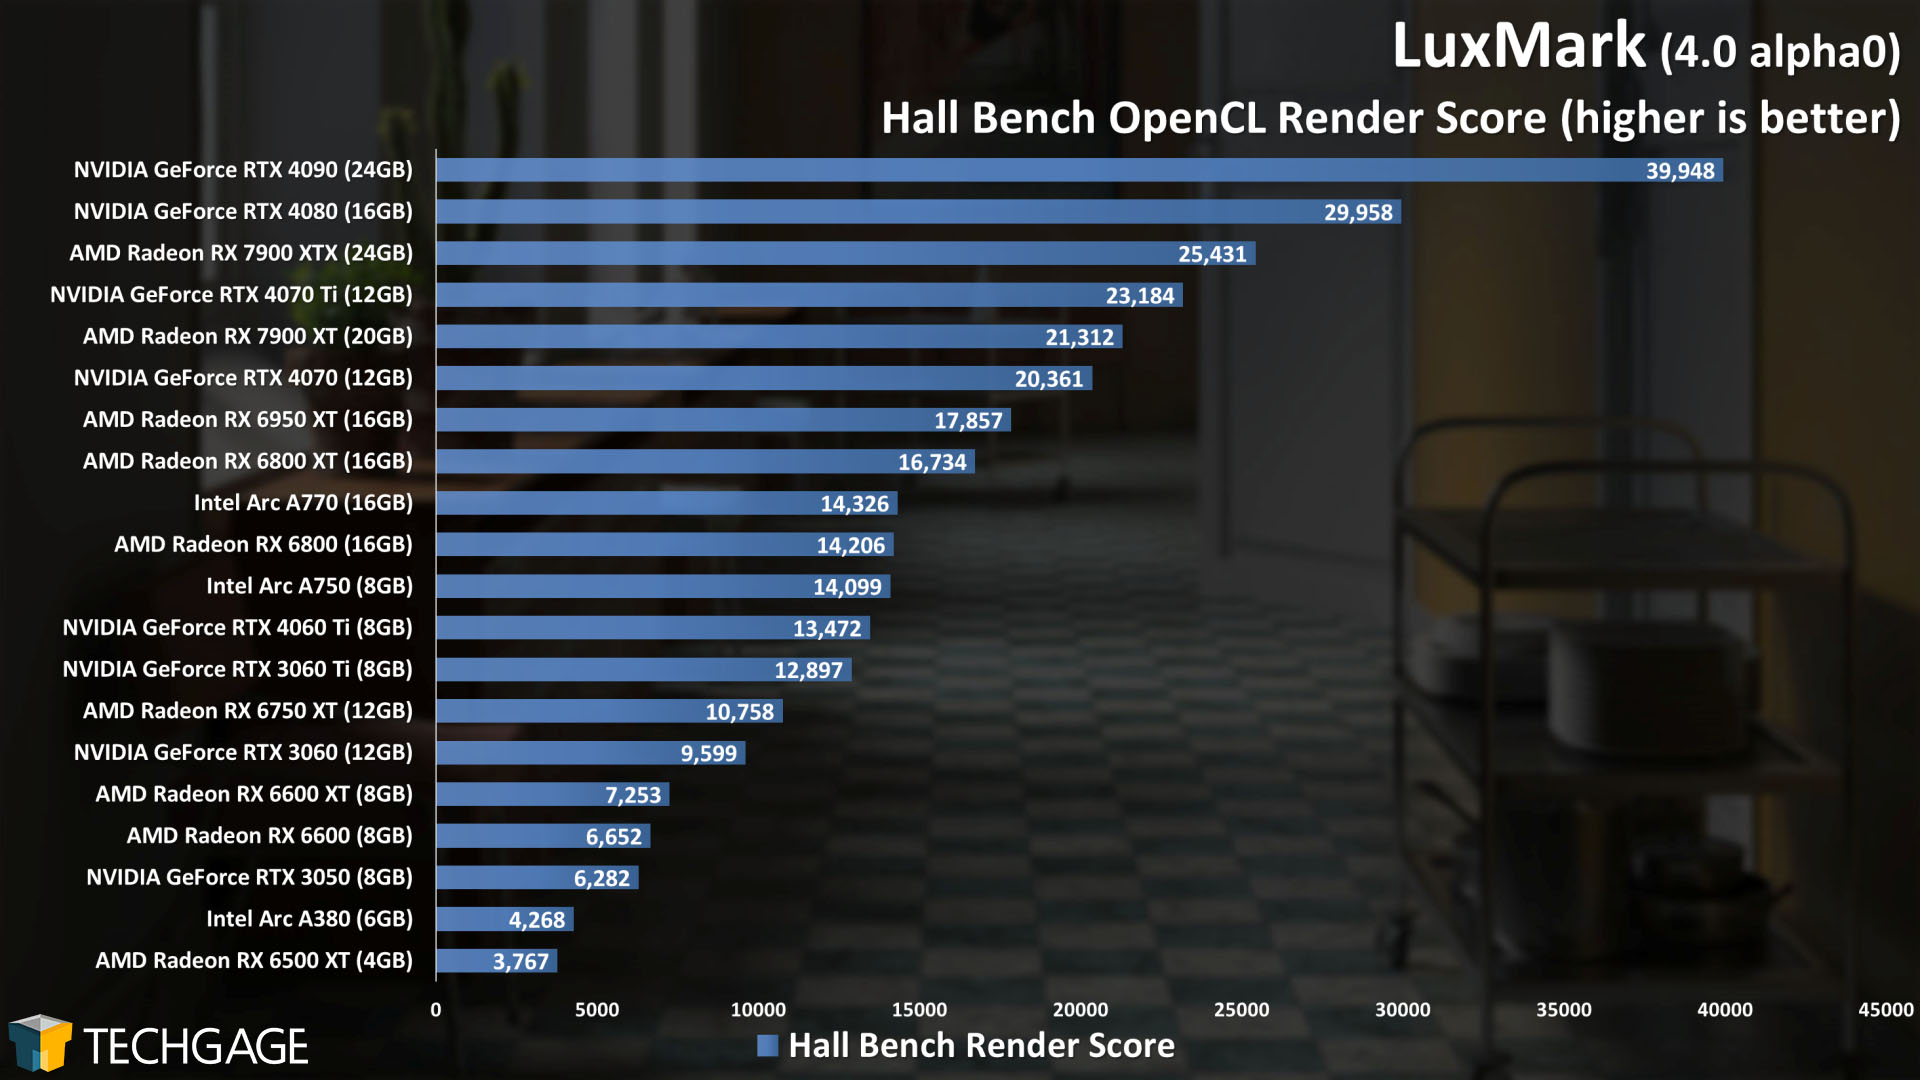 LuxMark - GPU Rendering Score (Hall Bench)